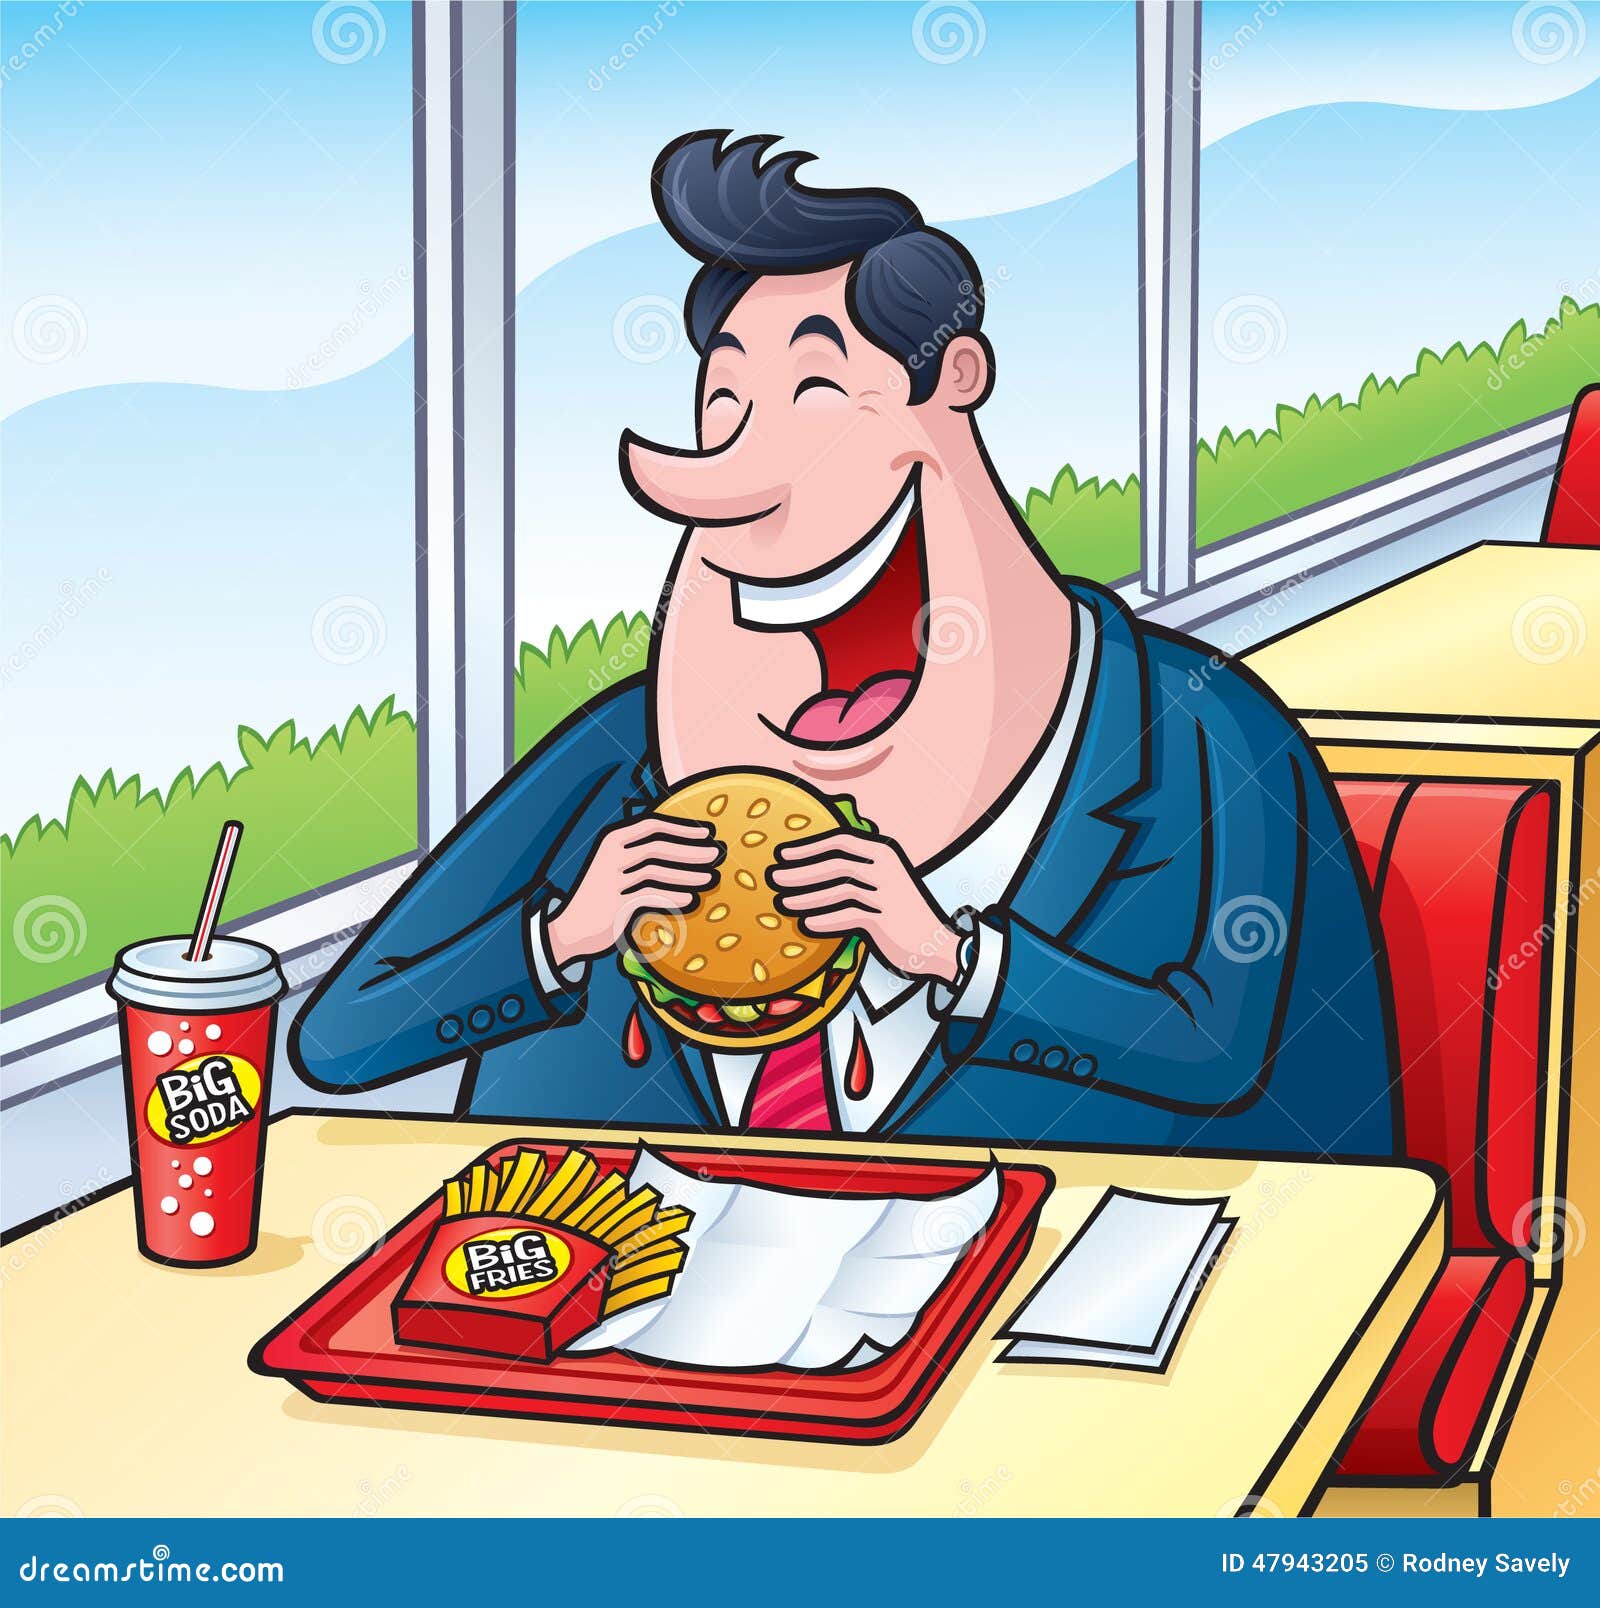 Big Guy Eating Fast Food Cheeseburger Stock Image - Image: 47943205